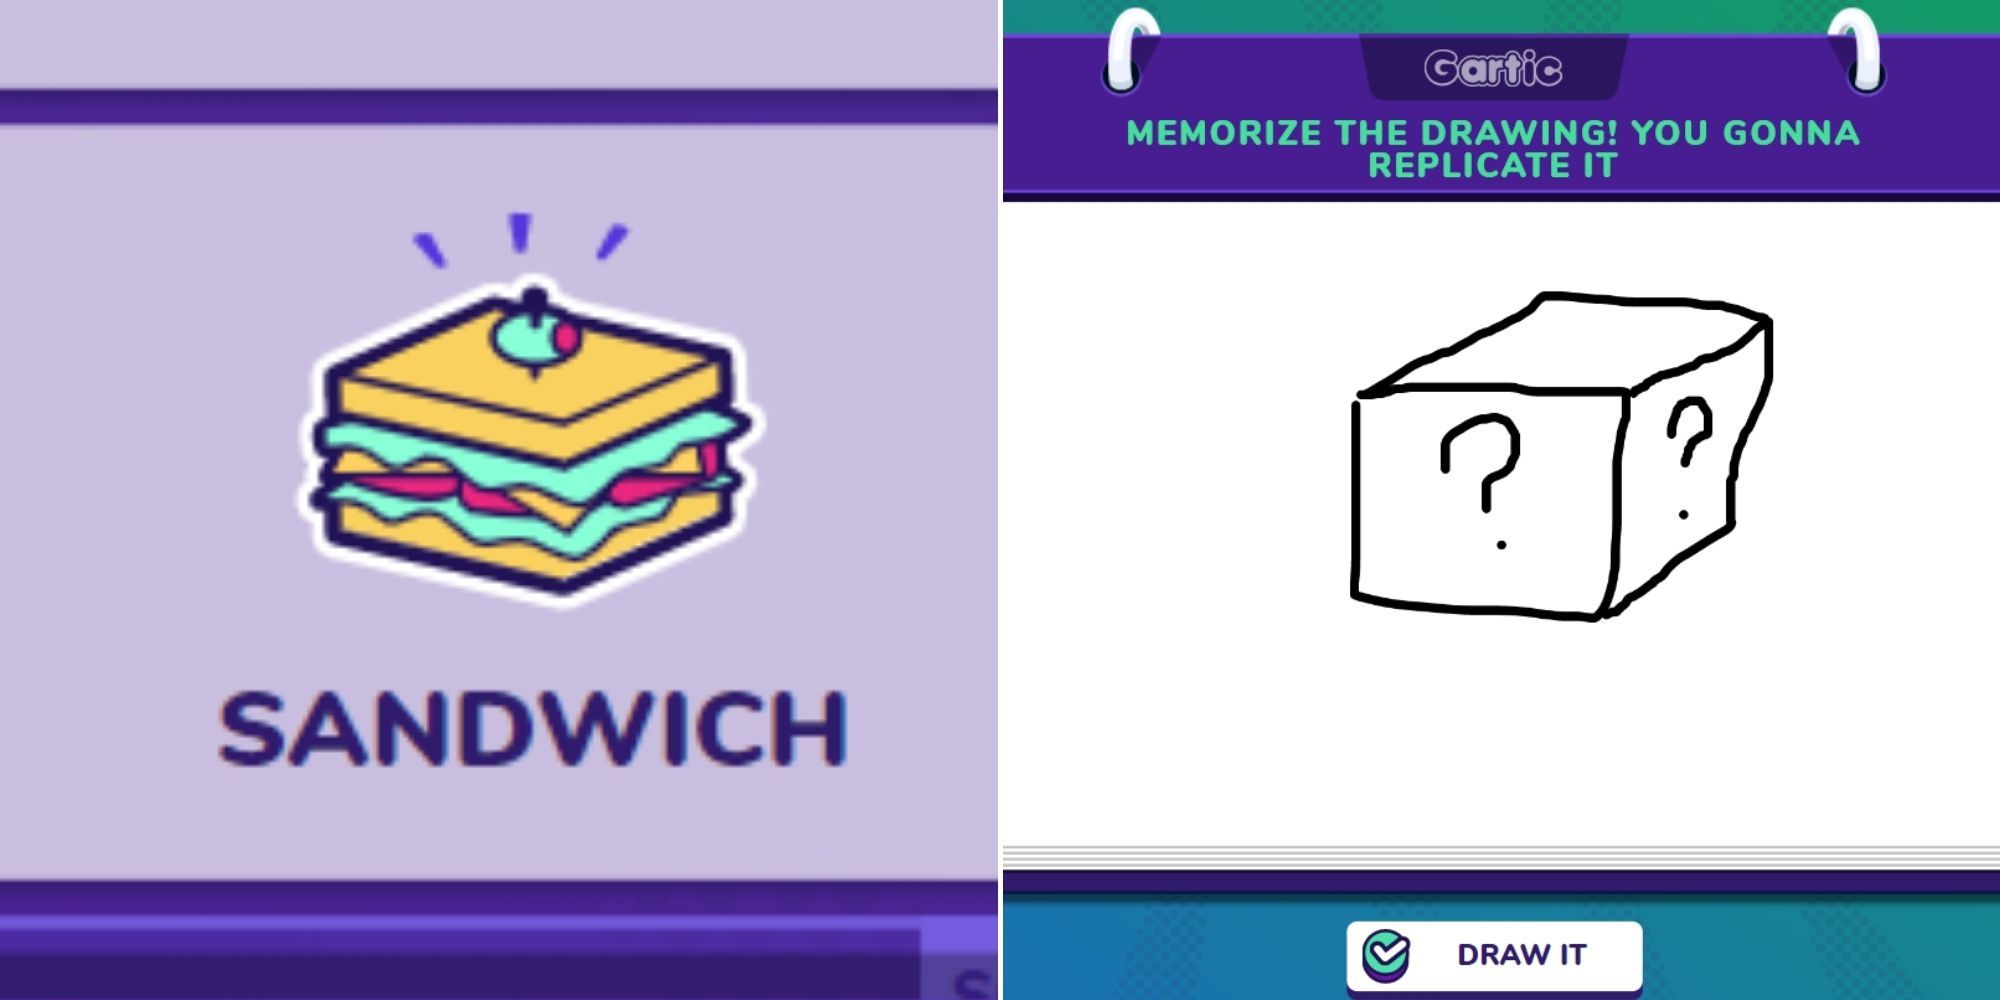 Gartic Phone - Sandwich Logo - A player memorizing a drawing